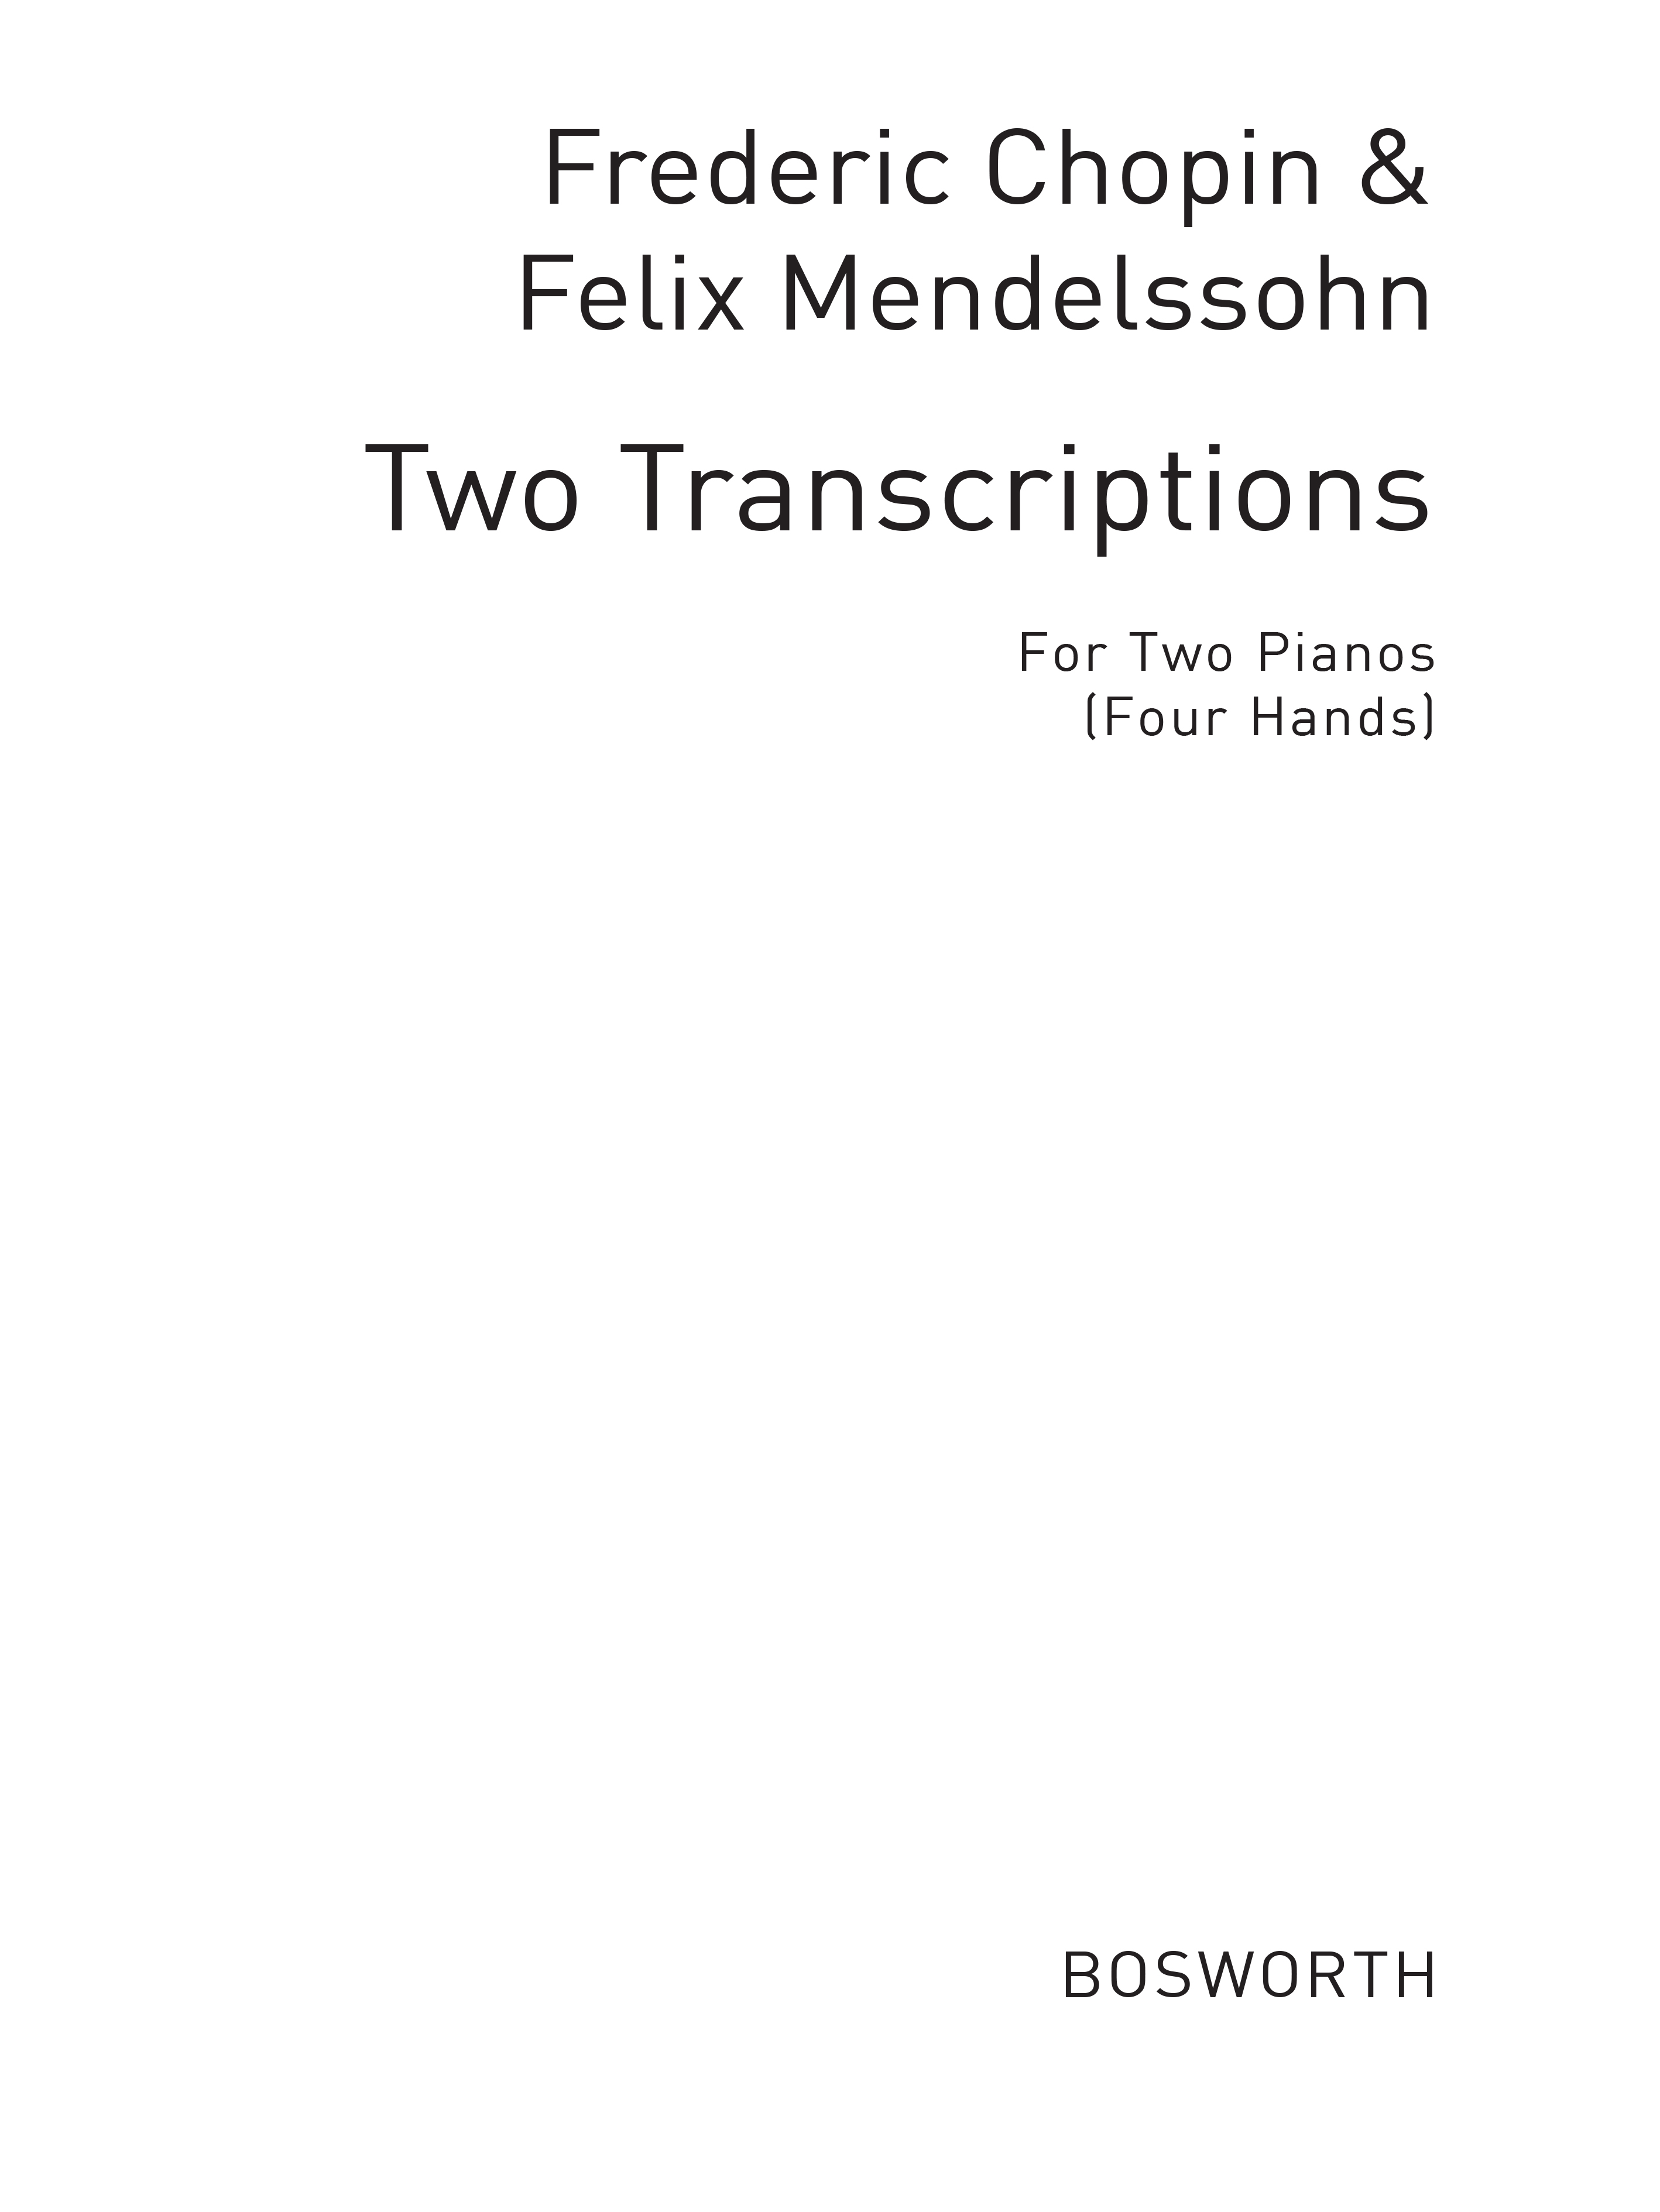 Chopin/Mendelssohn: Two Transcriptions